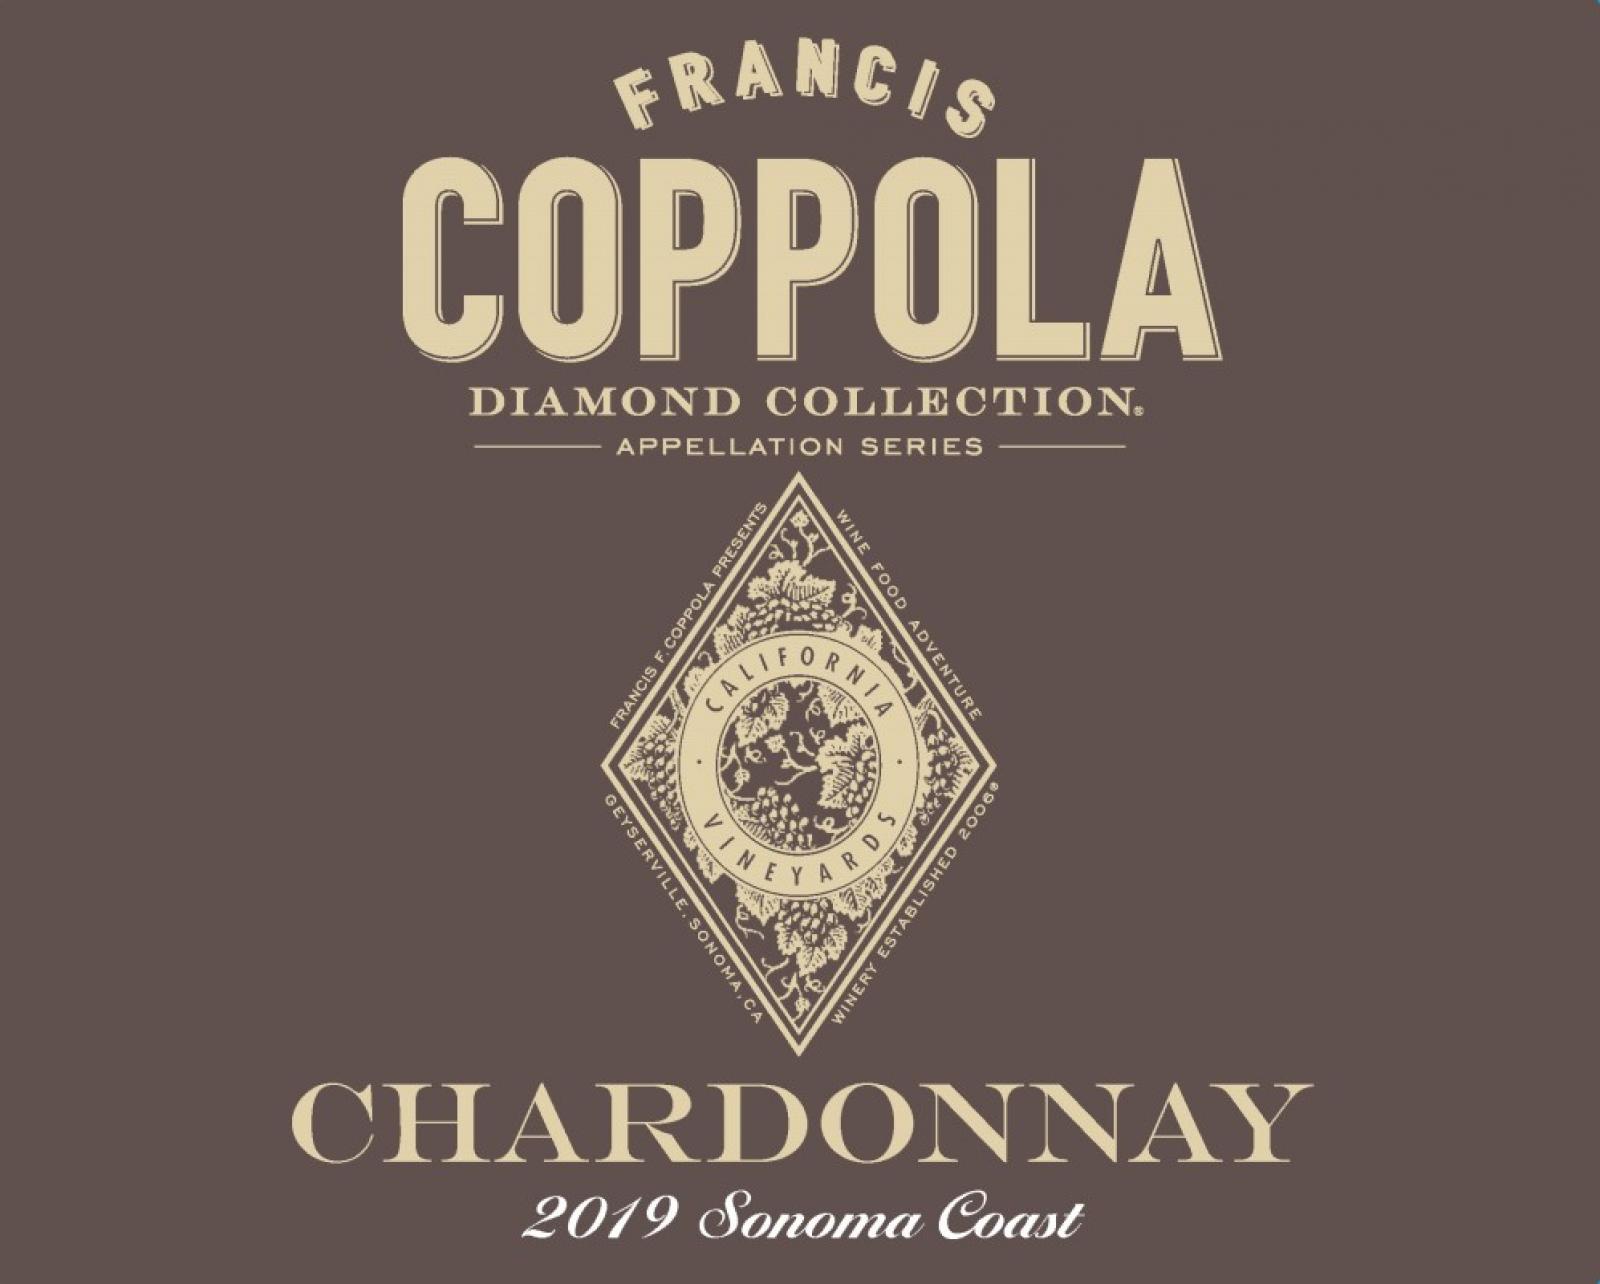 Diamond Chardonnay 2019